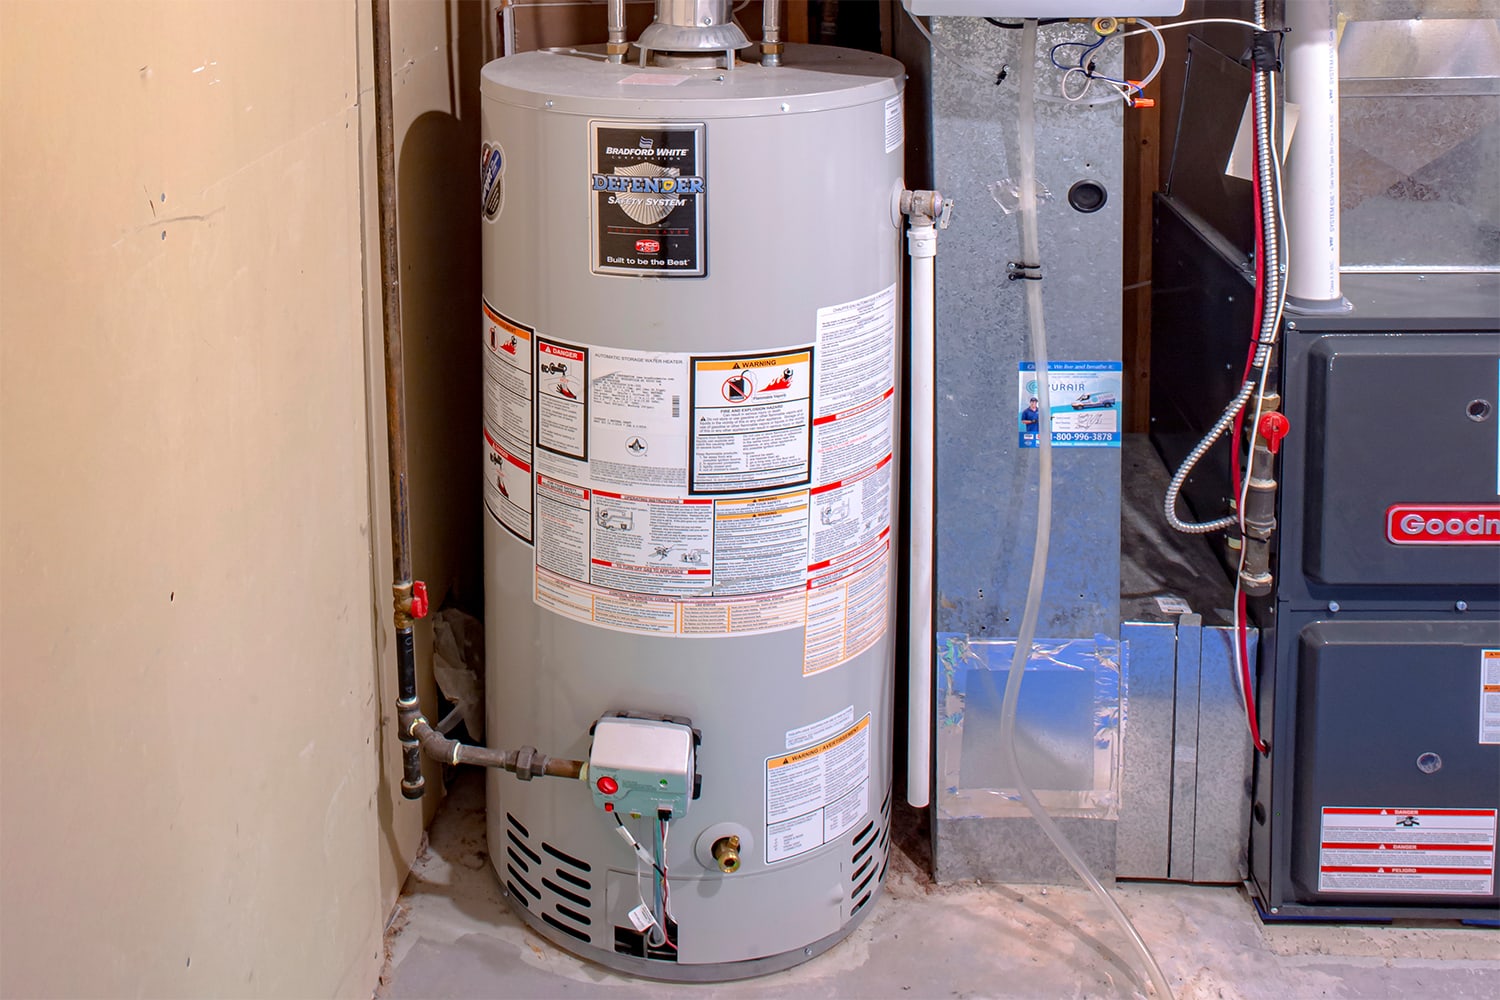 Bradford White Residential gas water heater